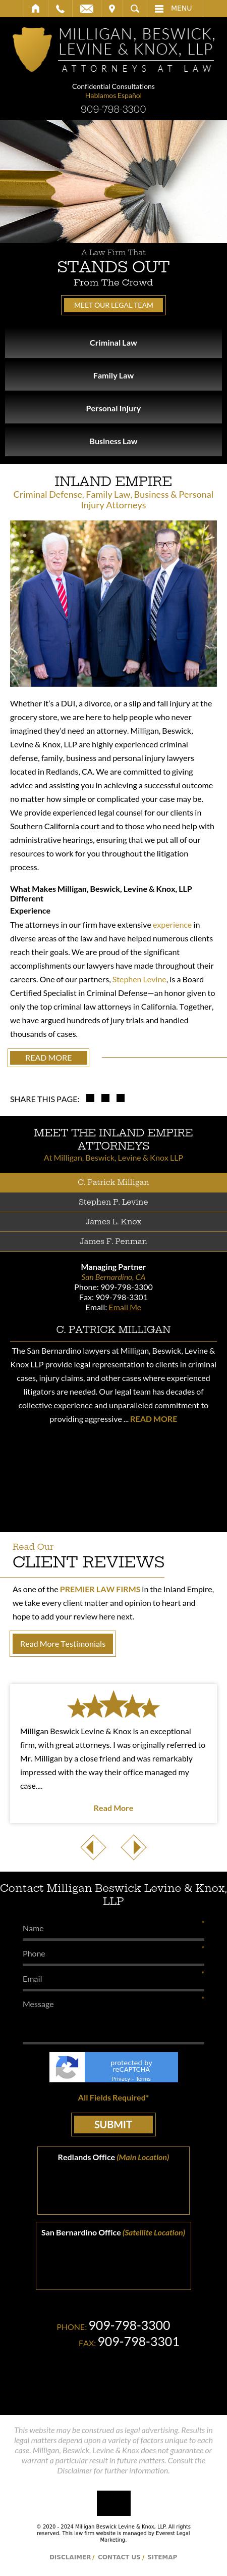 Milligan, Beswick, Levine, Knox, LLP. - San Bernardino CA Lawyers